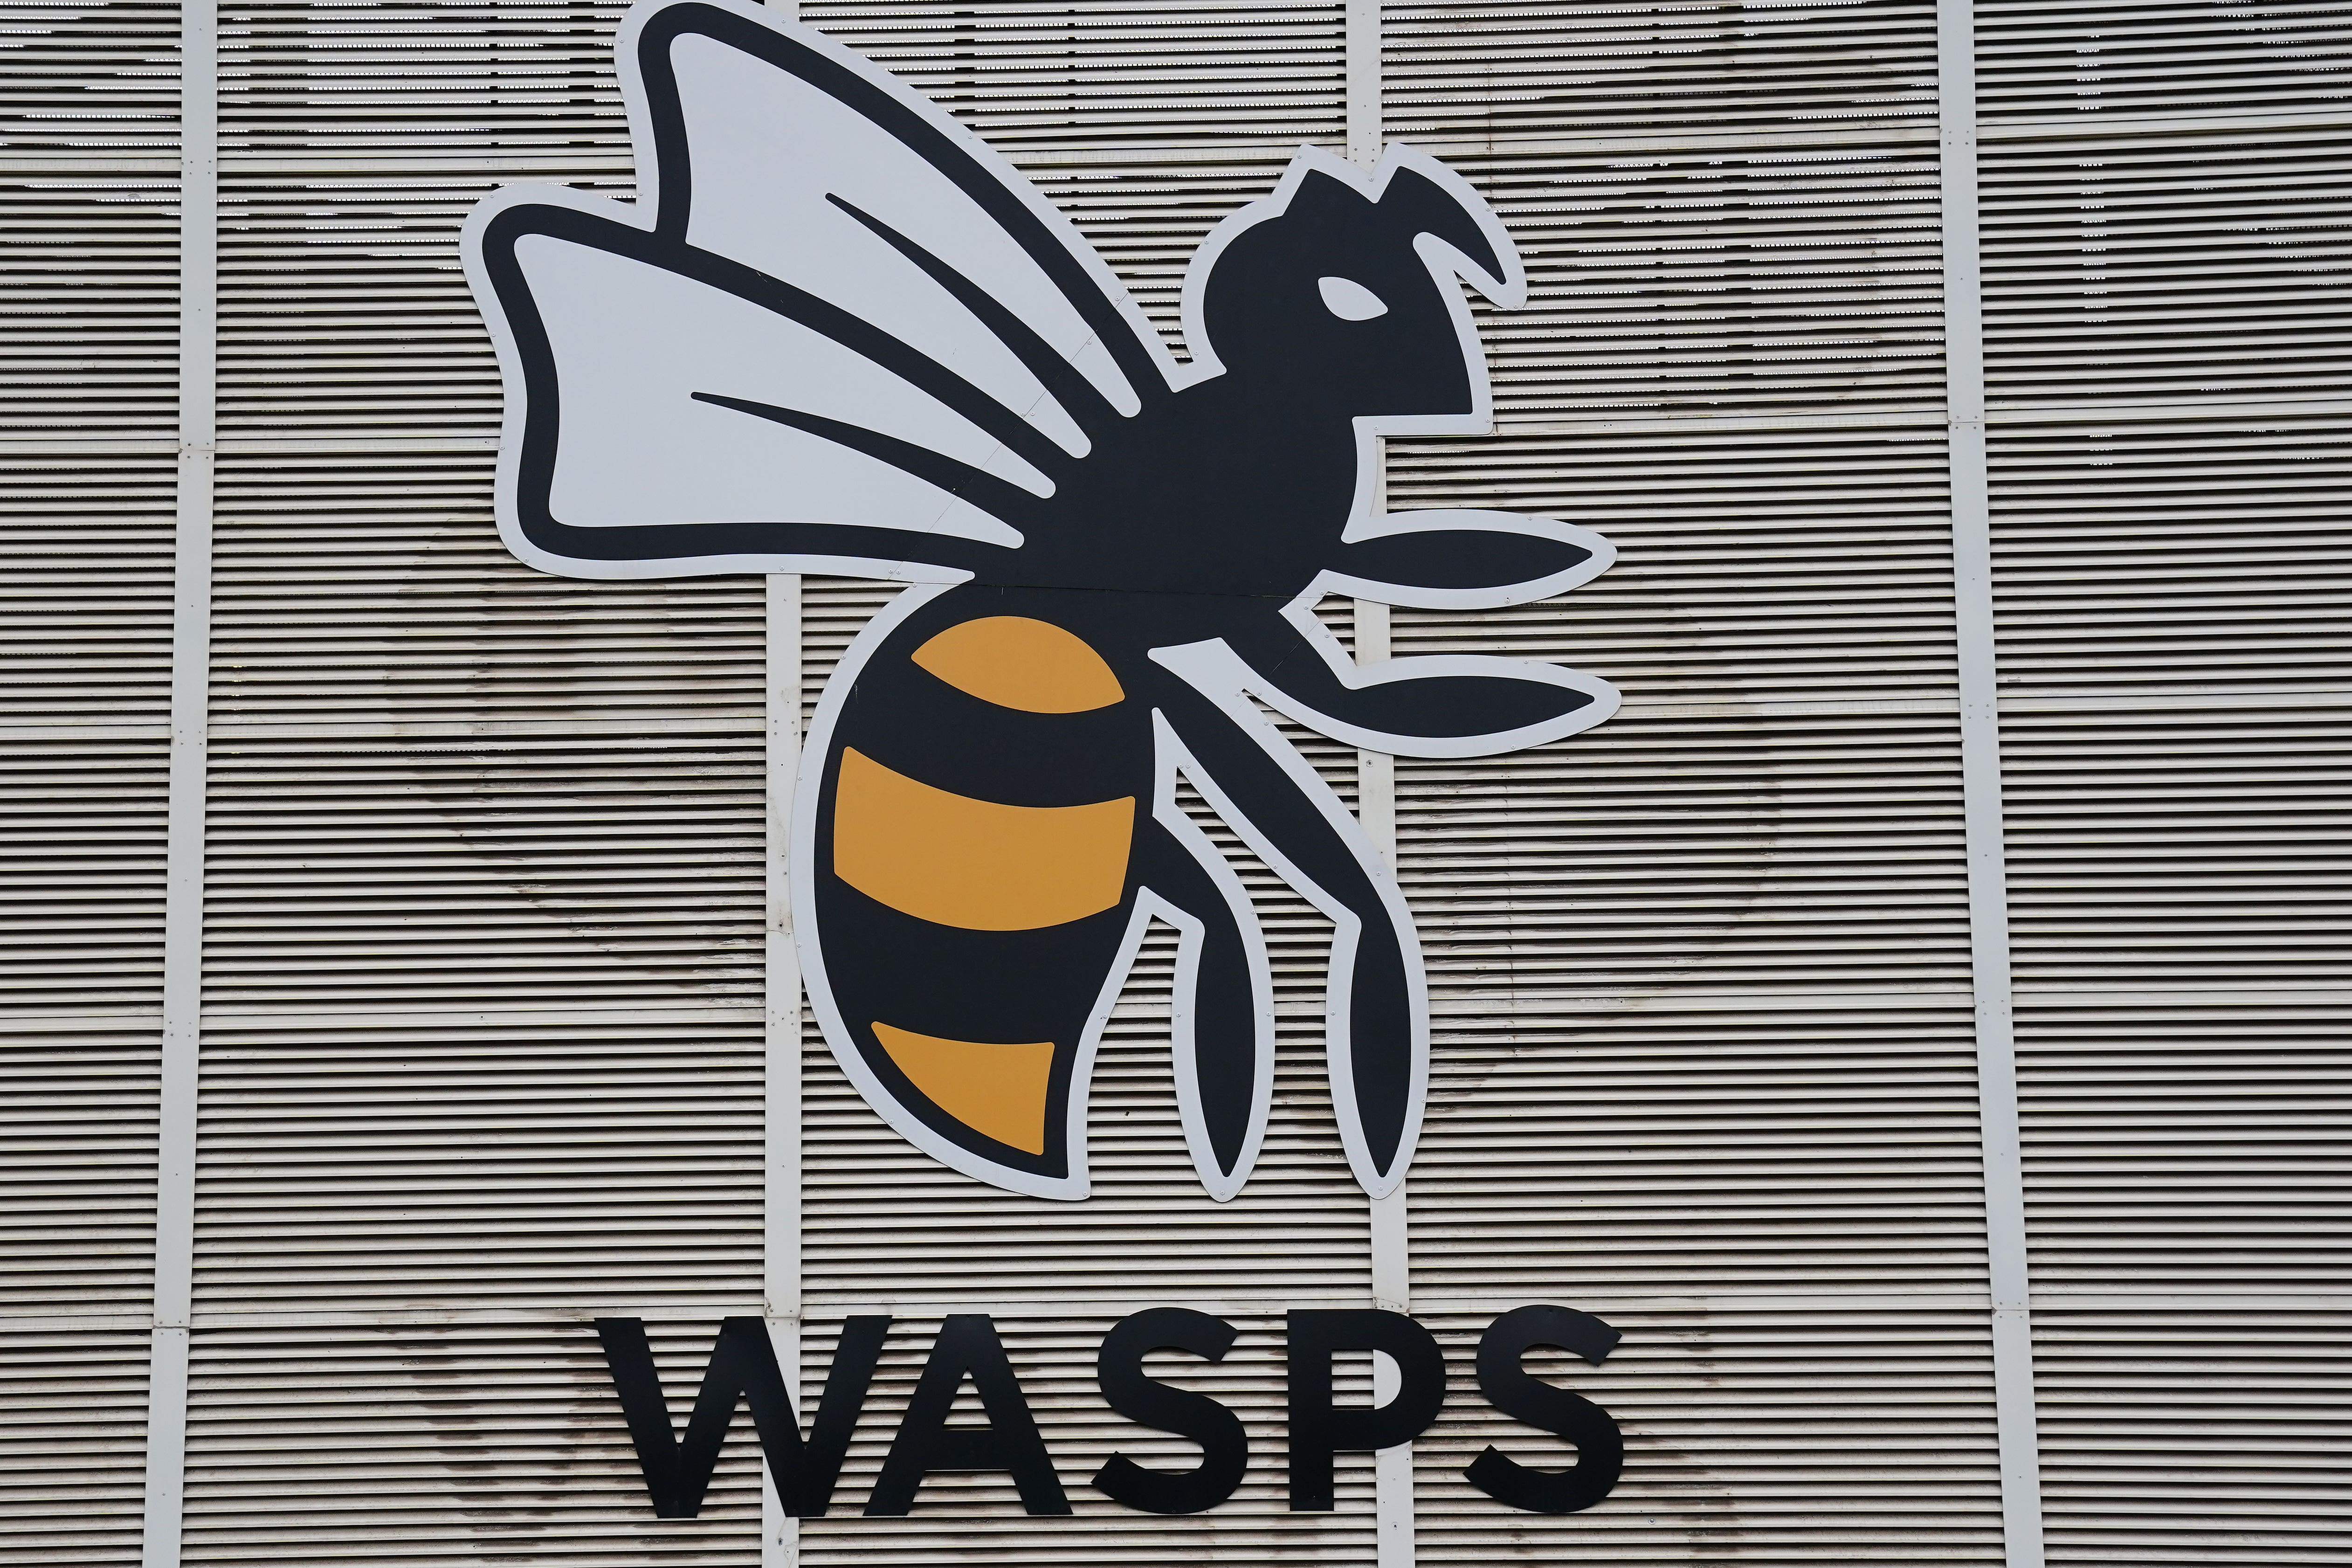 Wasps have entered administration